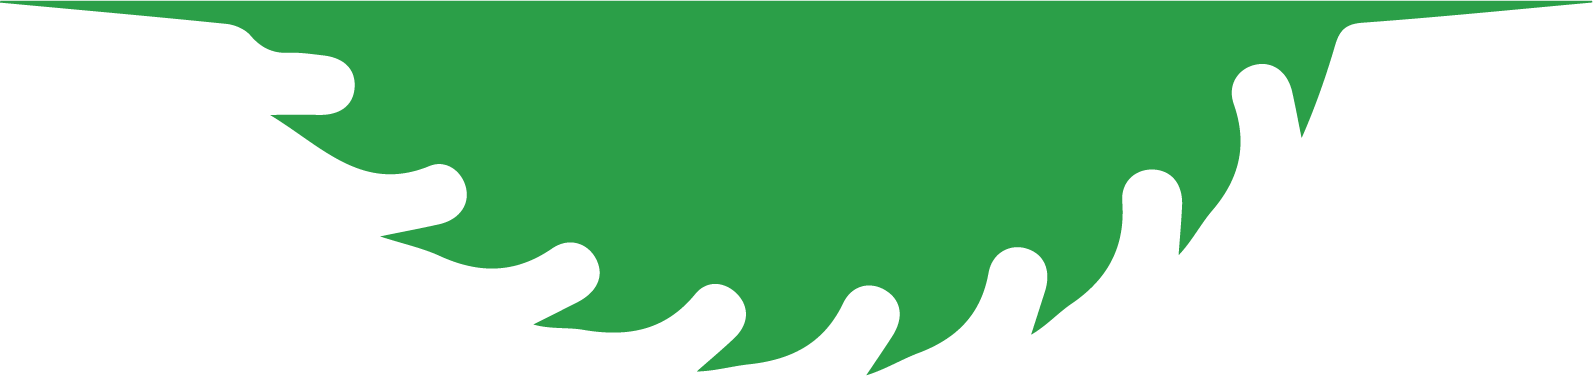 green saw blade dsl mills logo